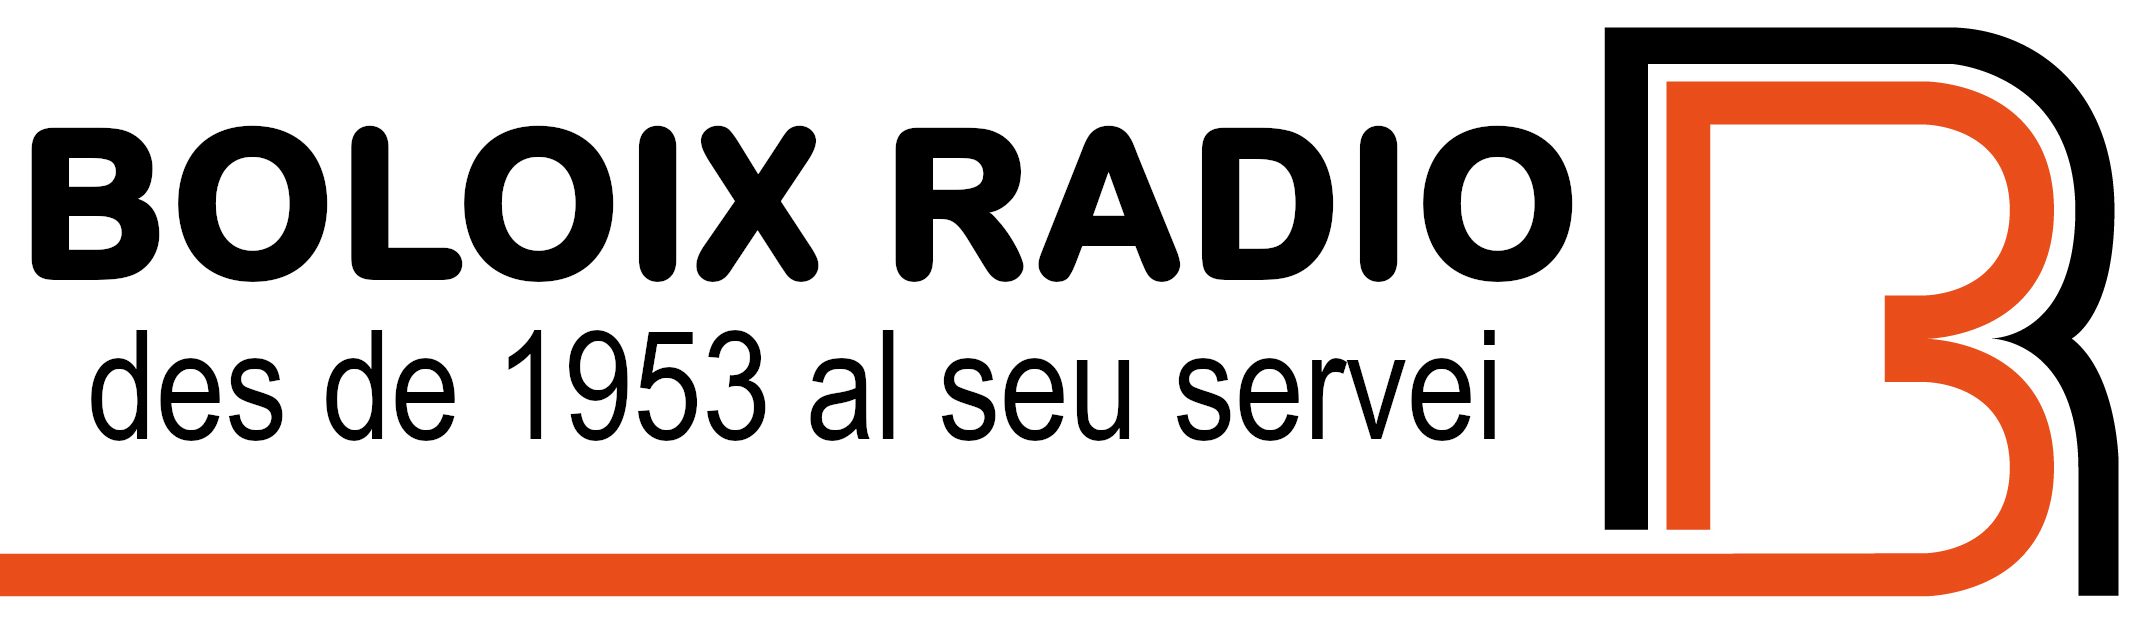 Boloix Ràdio